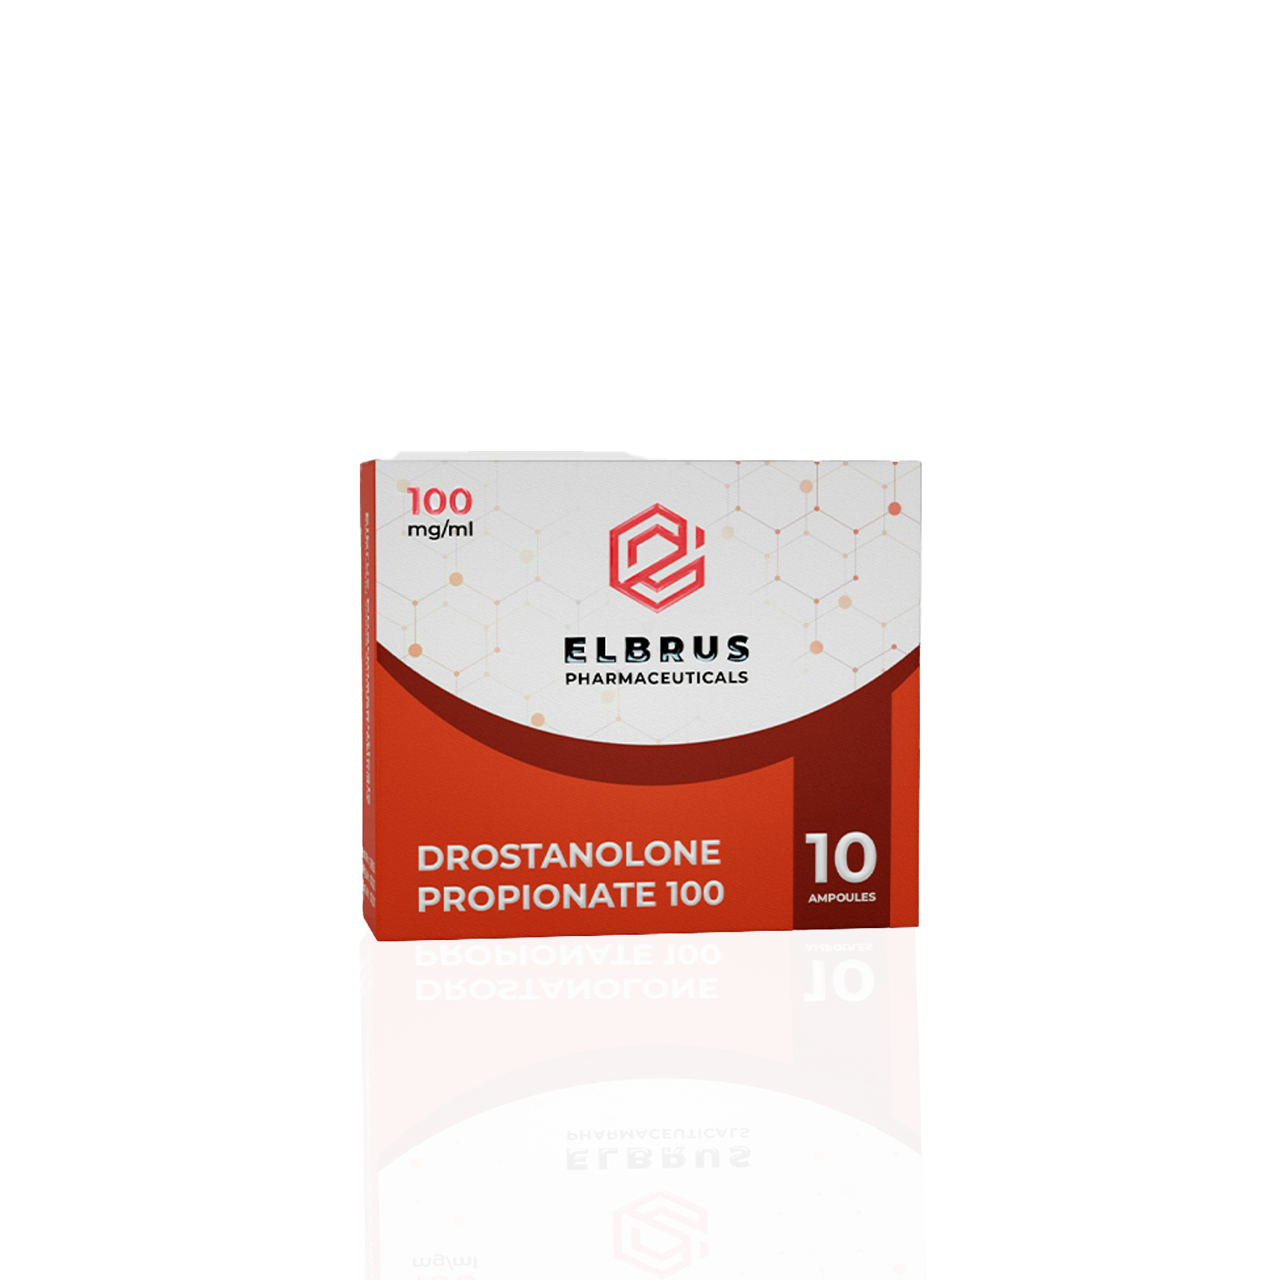 Drostanolone Propionate 100 mg Elbrus Pharmaceuticals Drostanolone